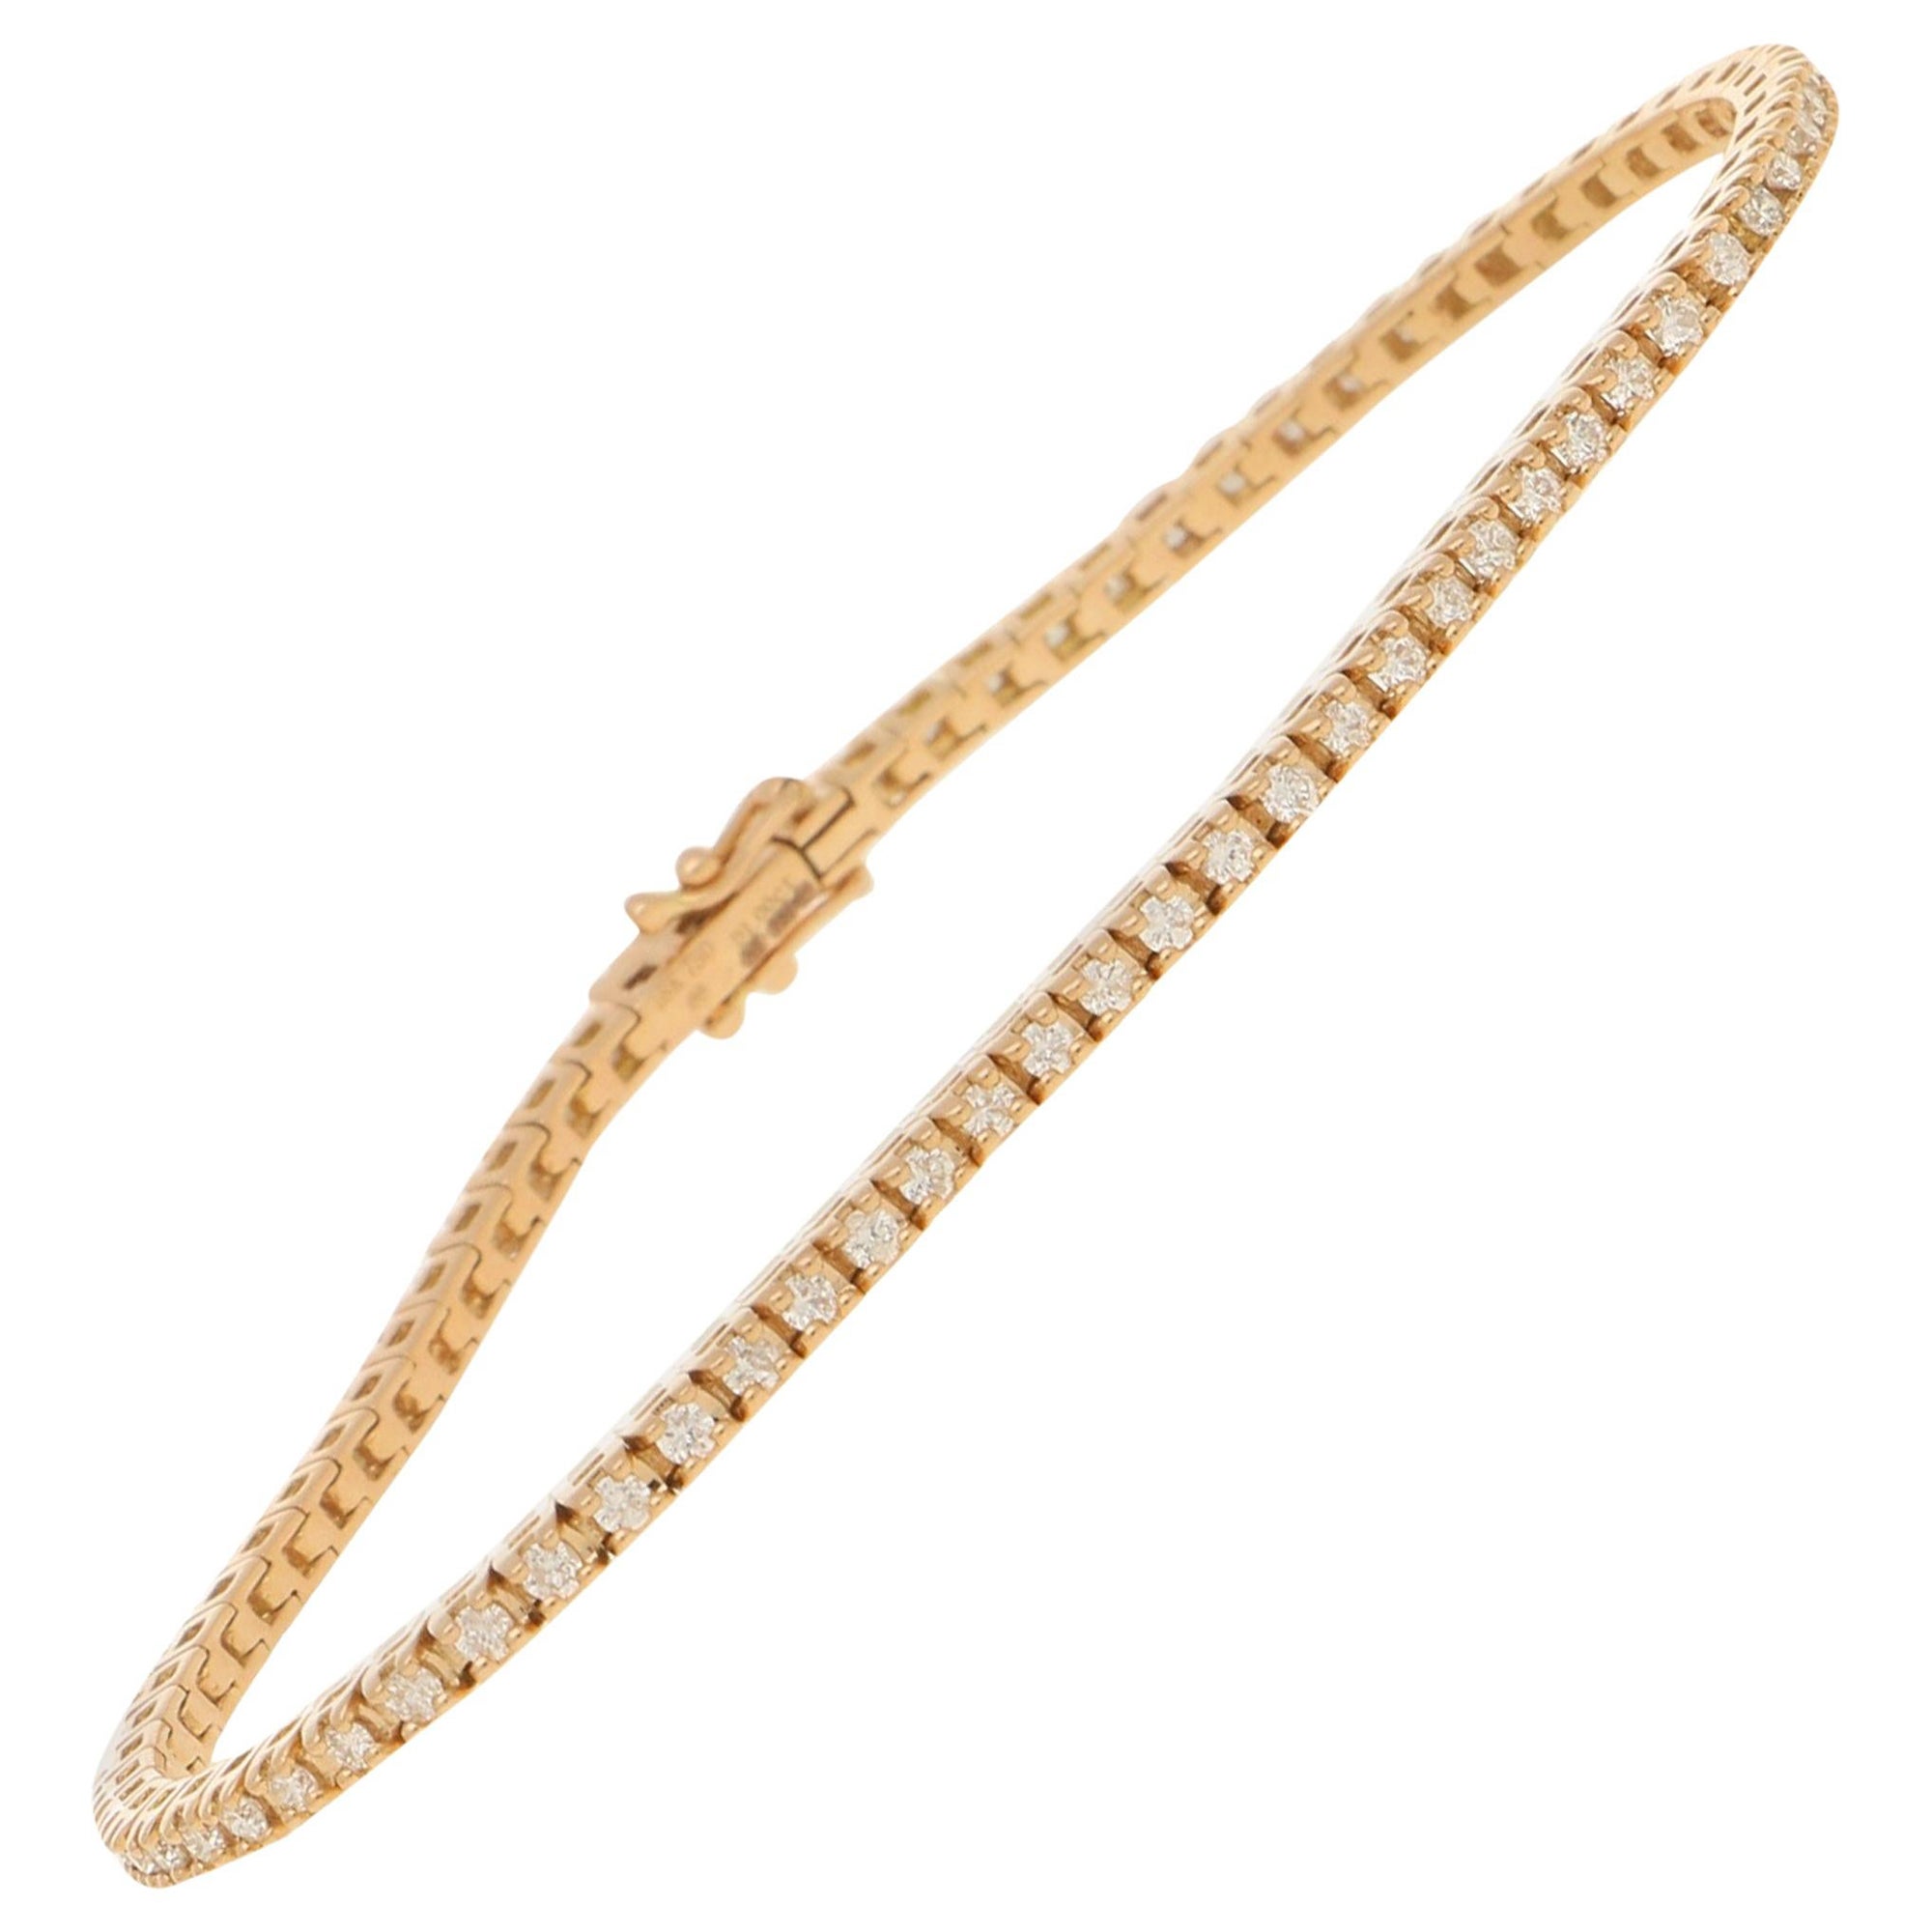 Bracelet tennis contemporain en or rose 18 carats serti de diamants